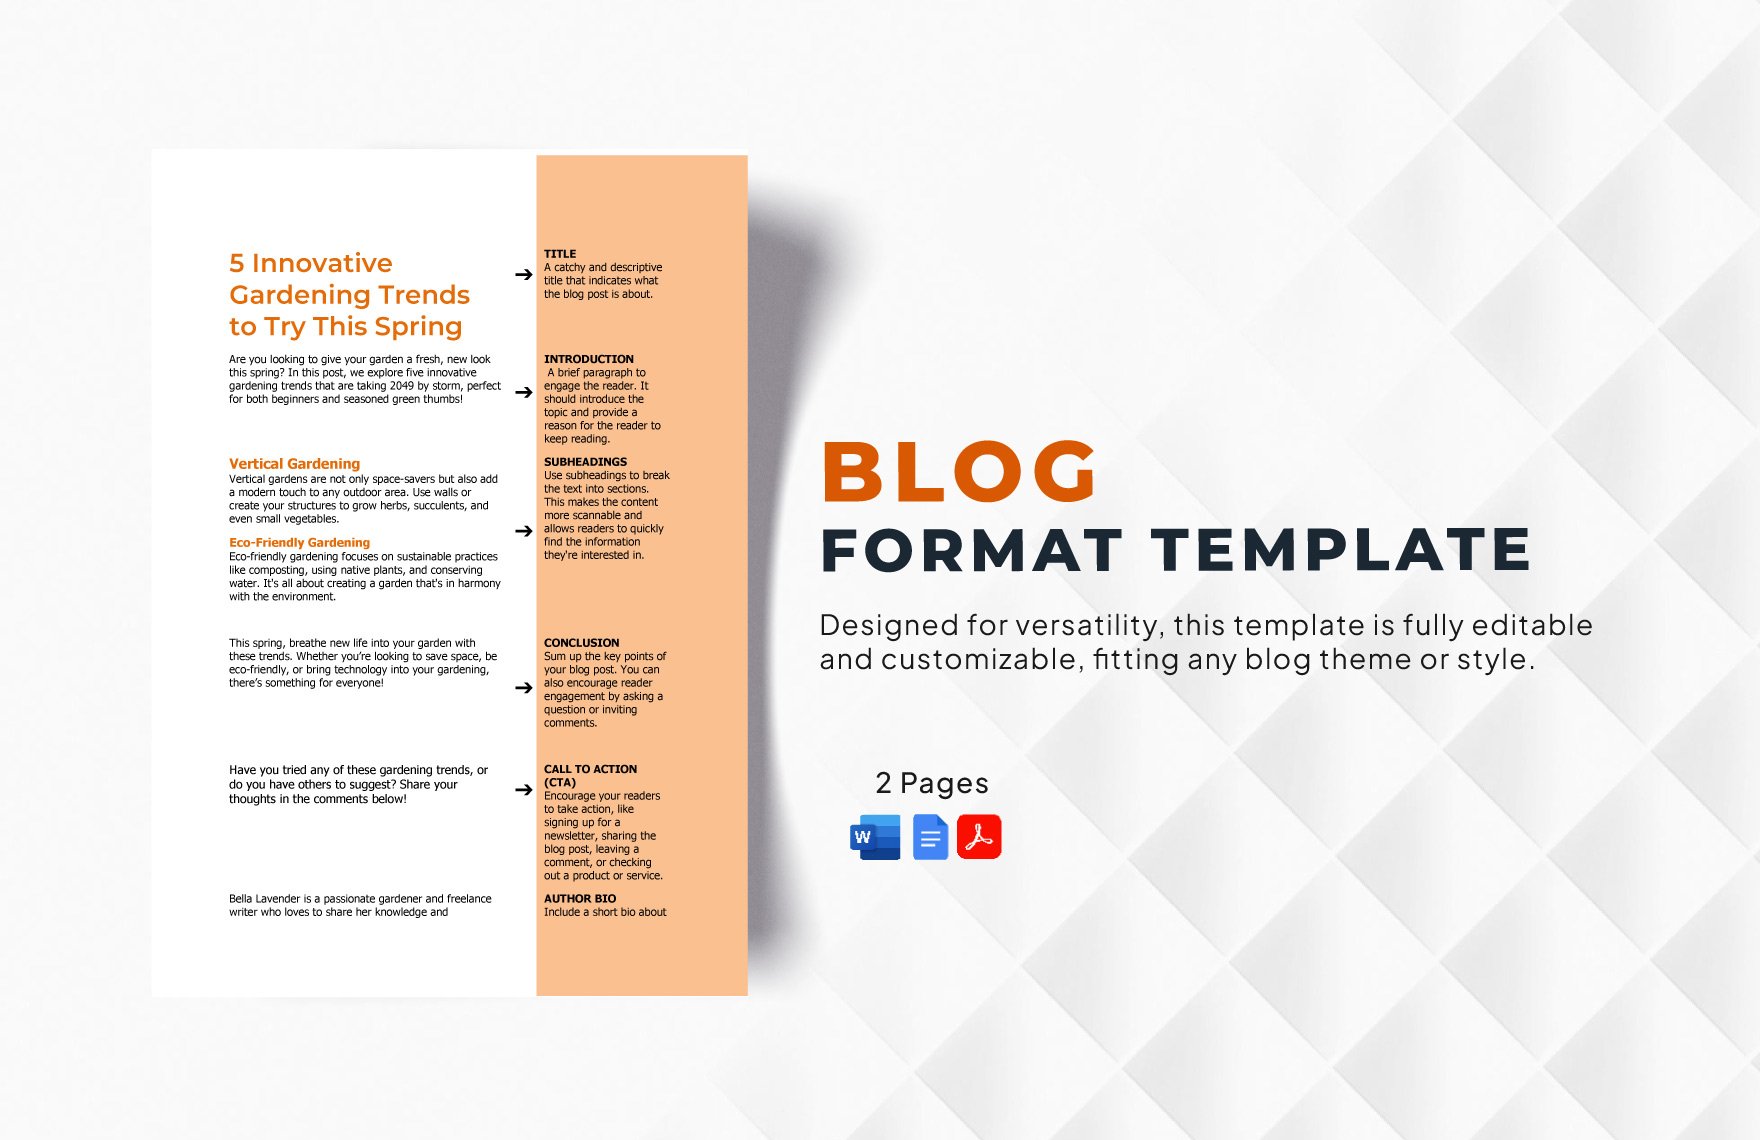 Blog Format Template